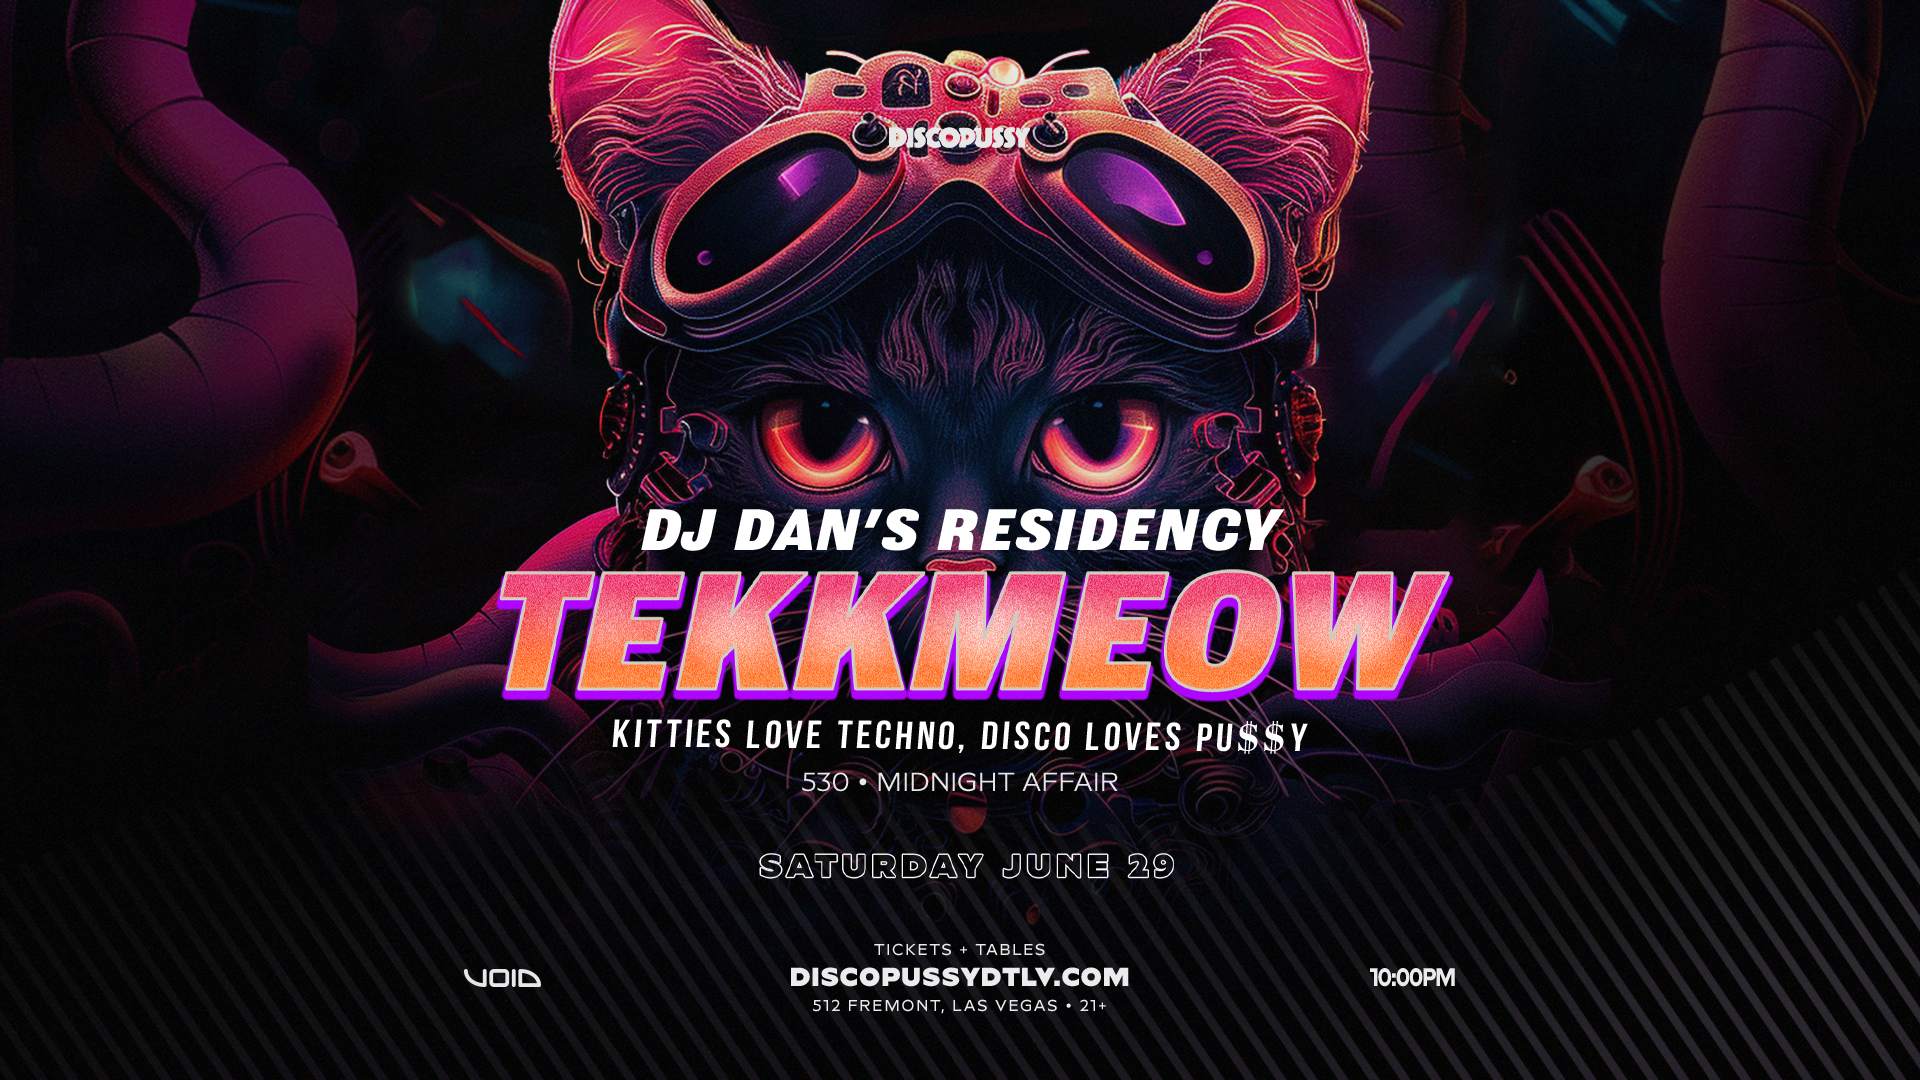 Discopussy presents: TEKKMEOW with DJ Dan - フライヤー表